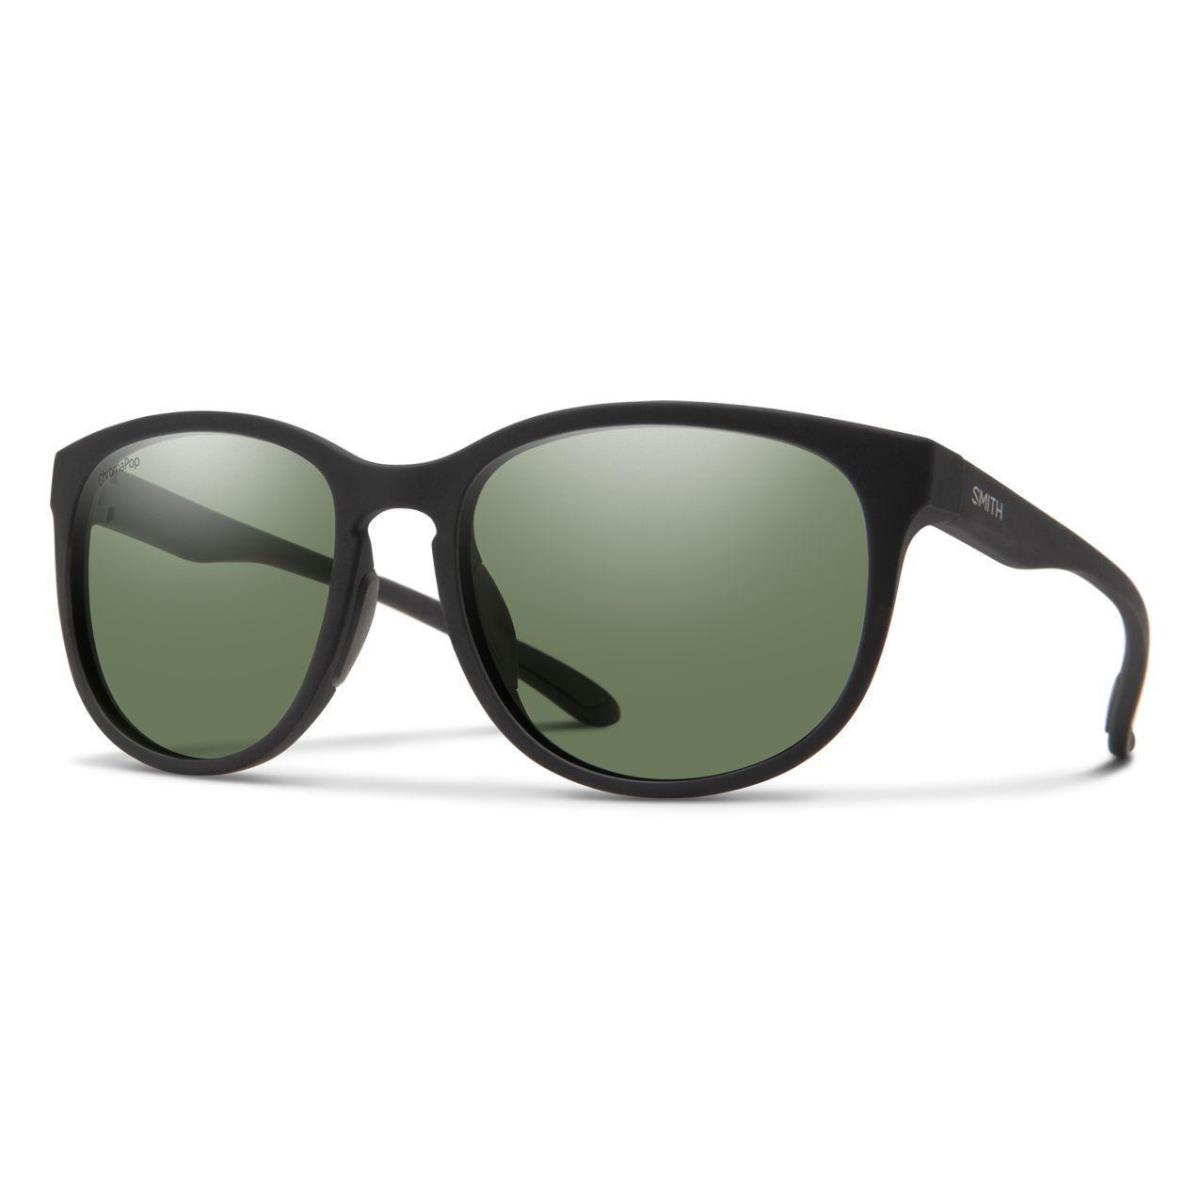 Smith Lake Shasta Sunglasses Matte Black - Chromapop Polarized Grey Green